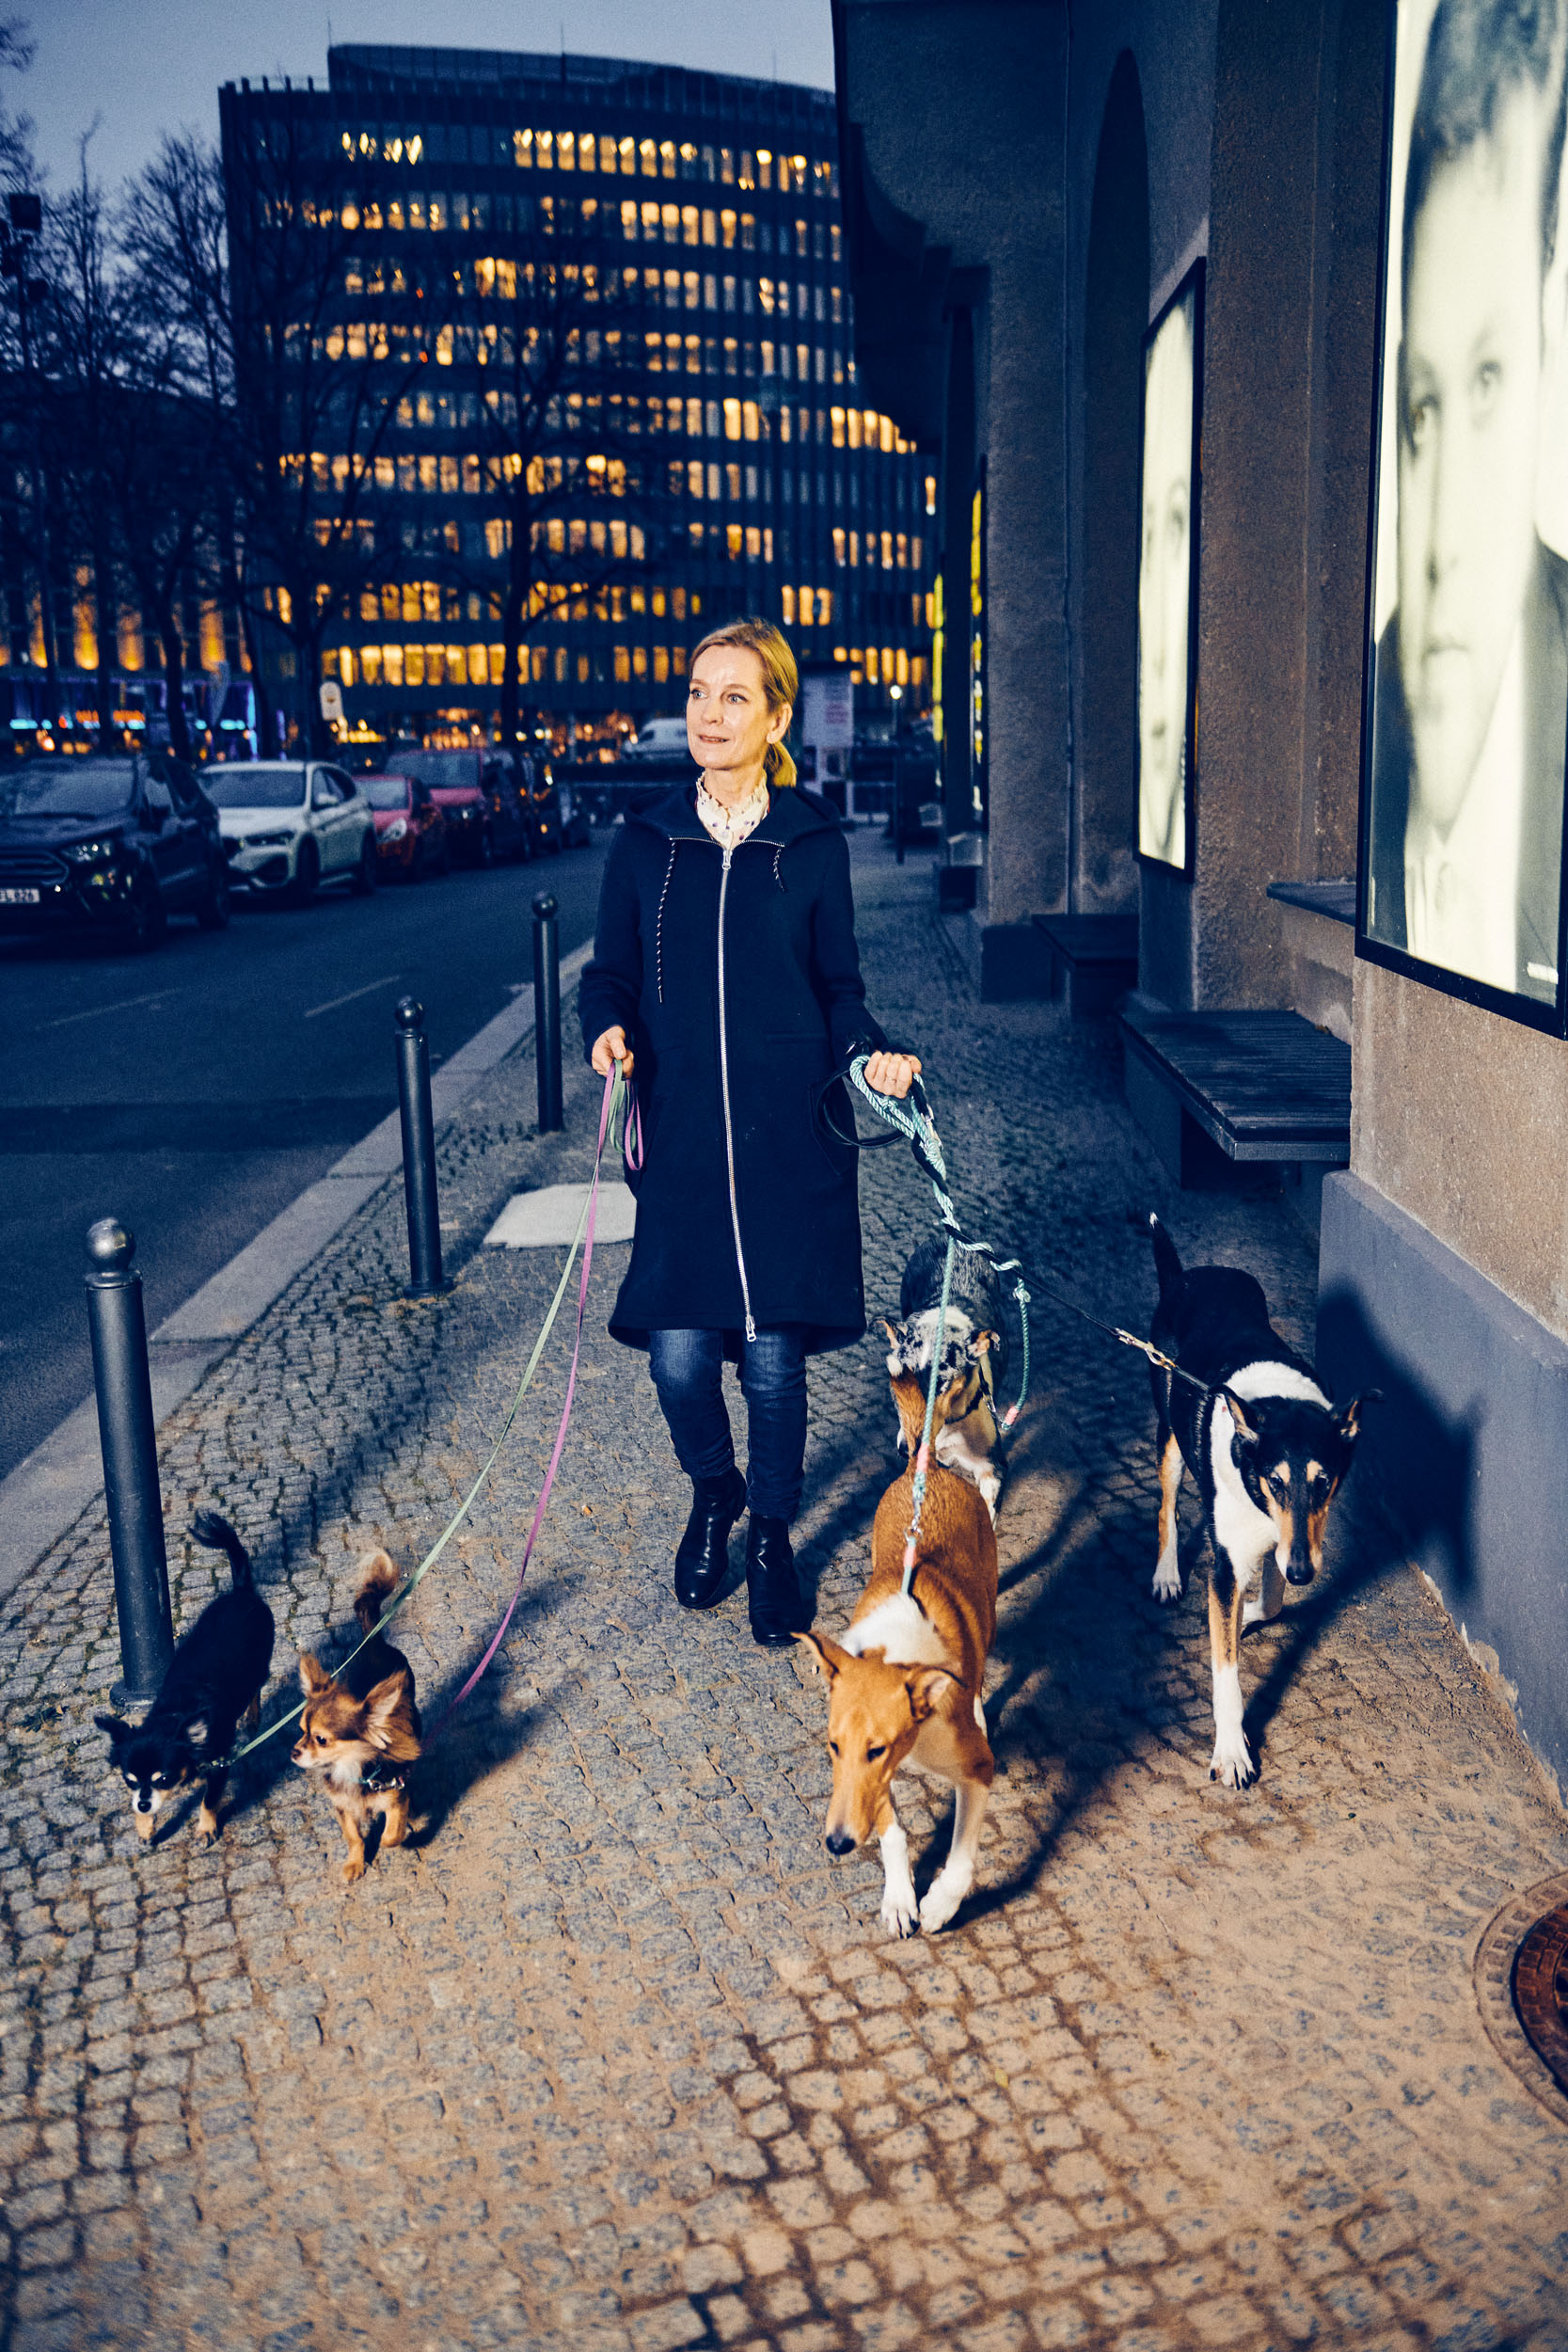 urban zintel photography — 5 dogs & judith engel